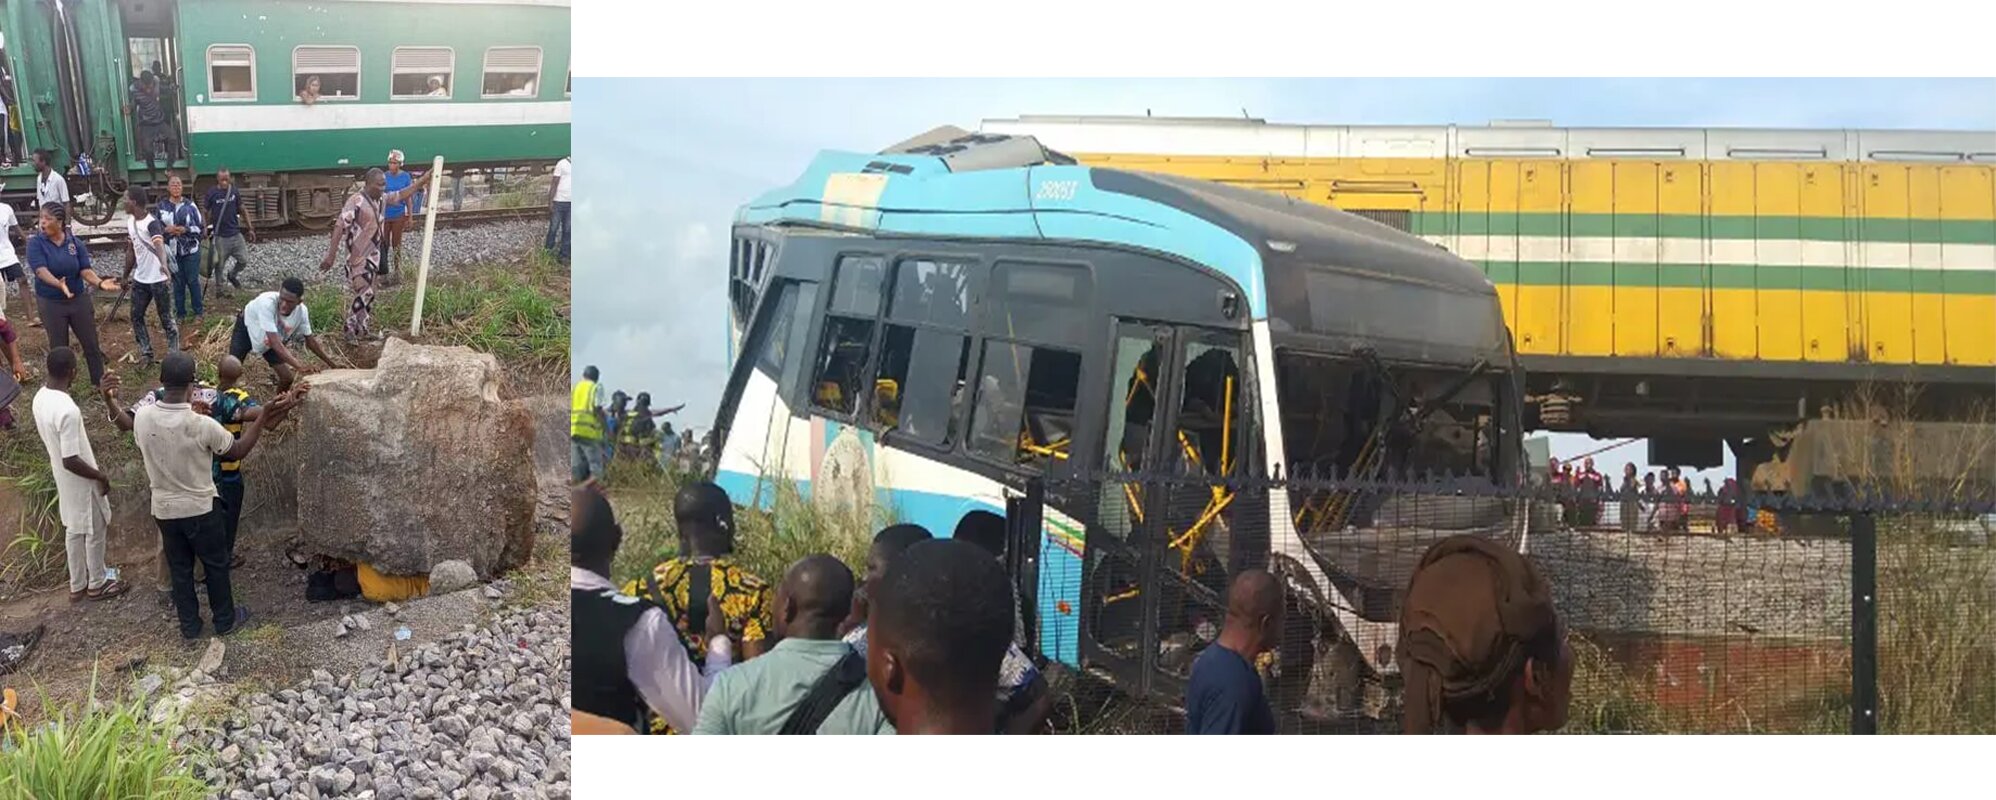 6-Dead-80-Injured-In-Lagos-Nigeria-Train-And-BRT-Bus-Accident.jpg